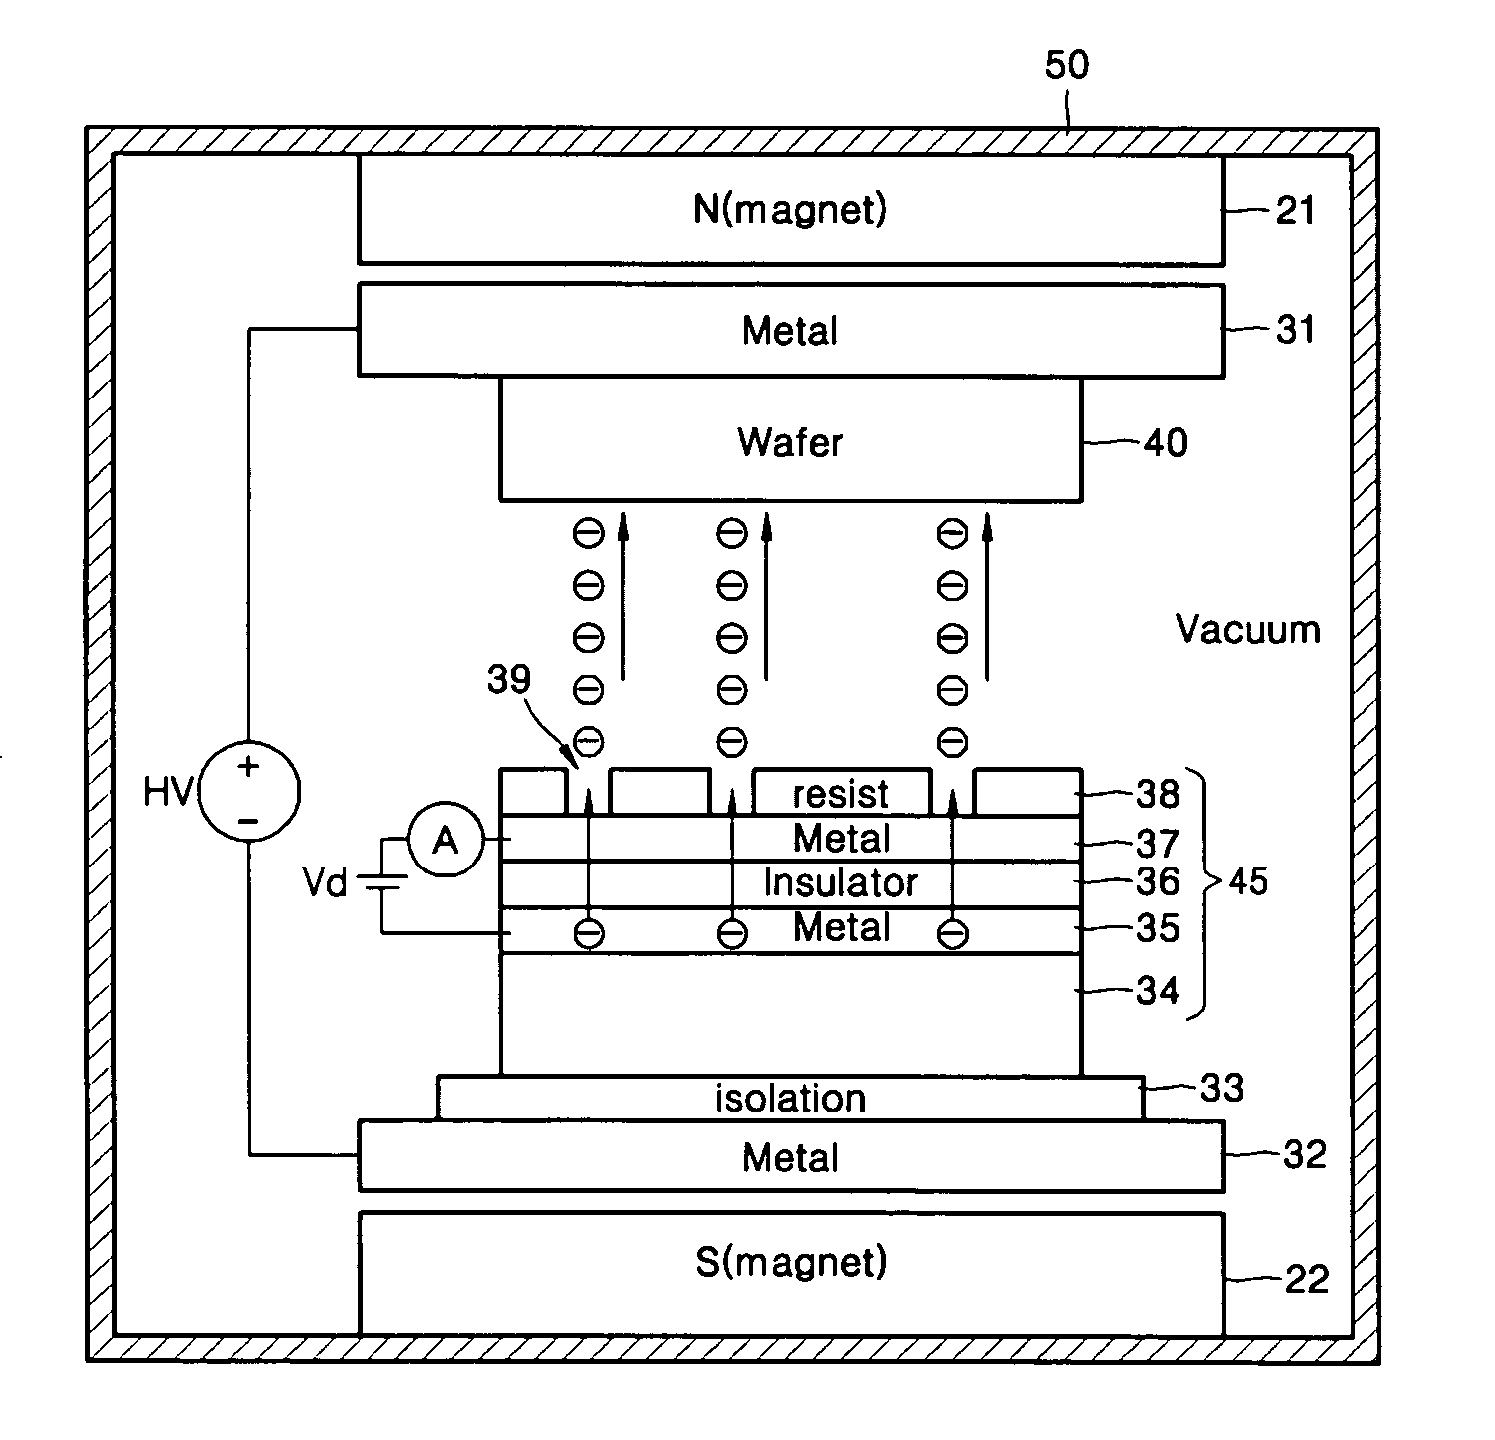 Apparatus and method of fabricating emitter using arc